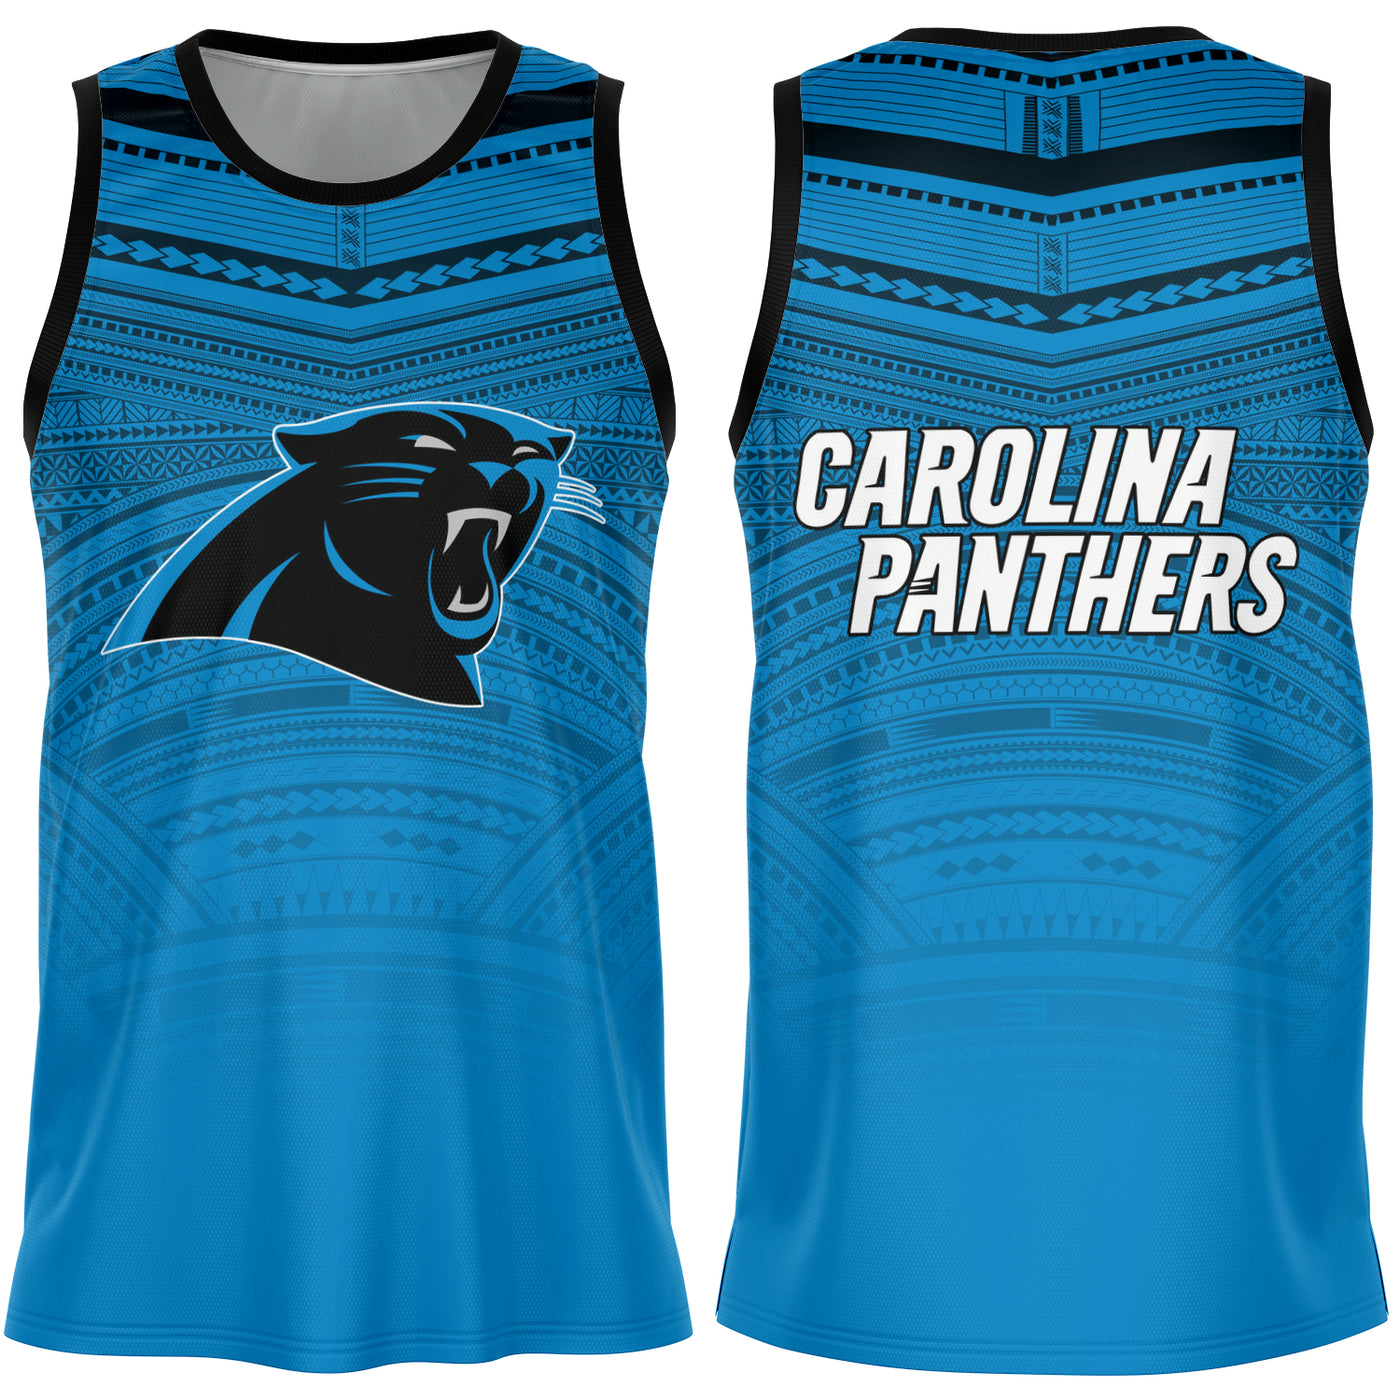 Carolina Panthers jersey collection